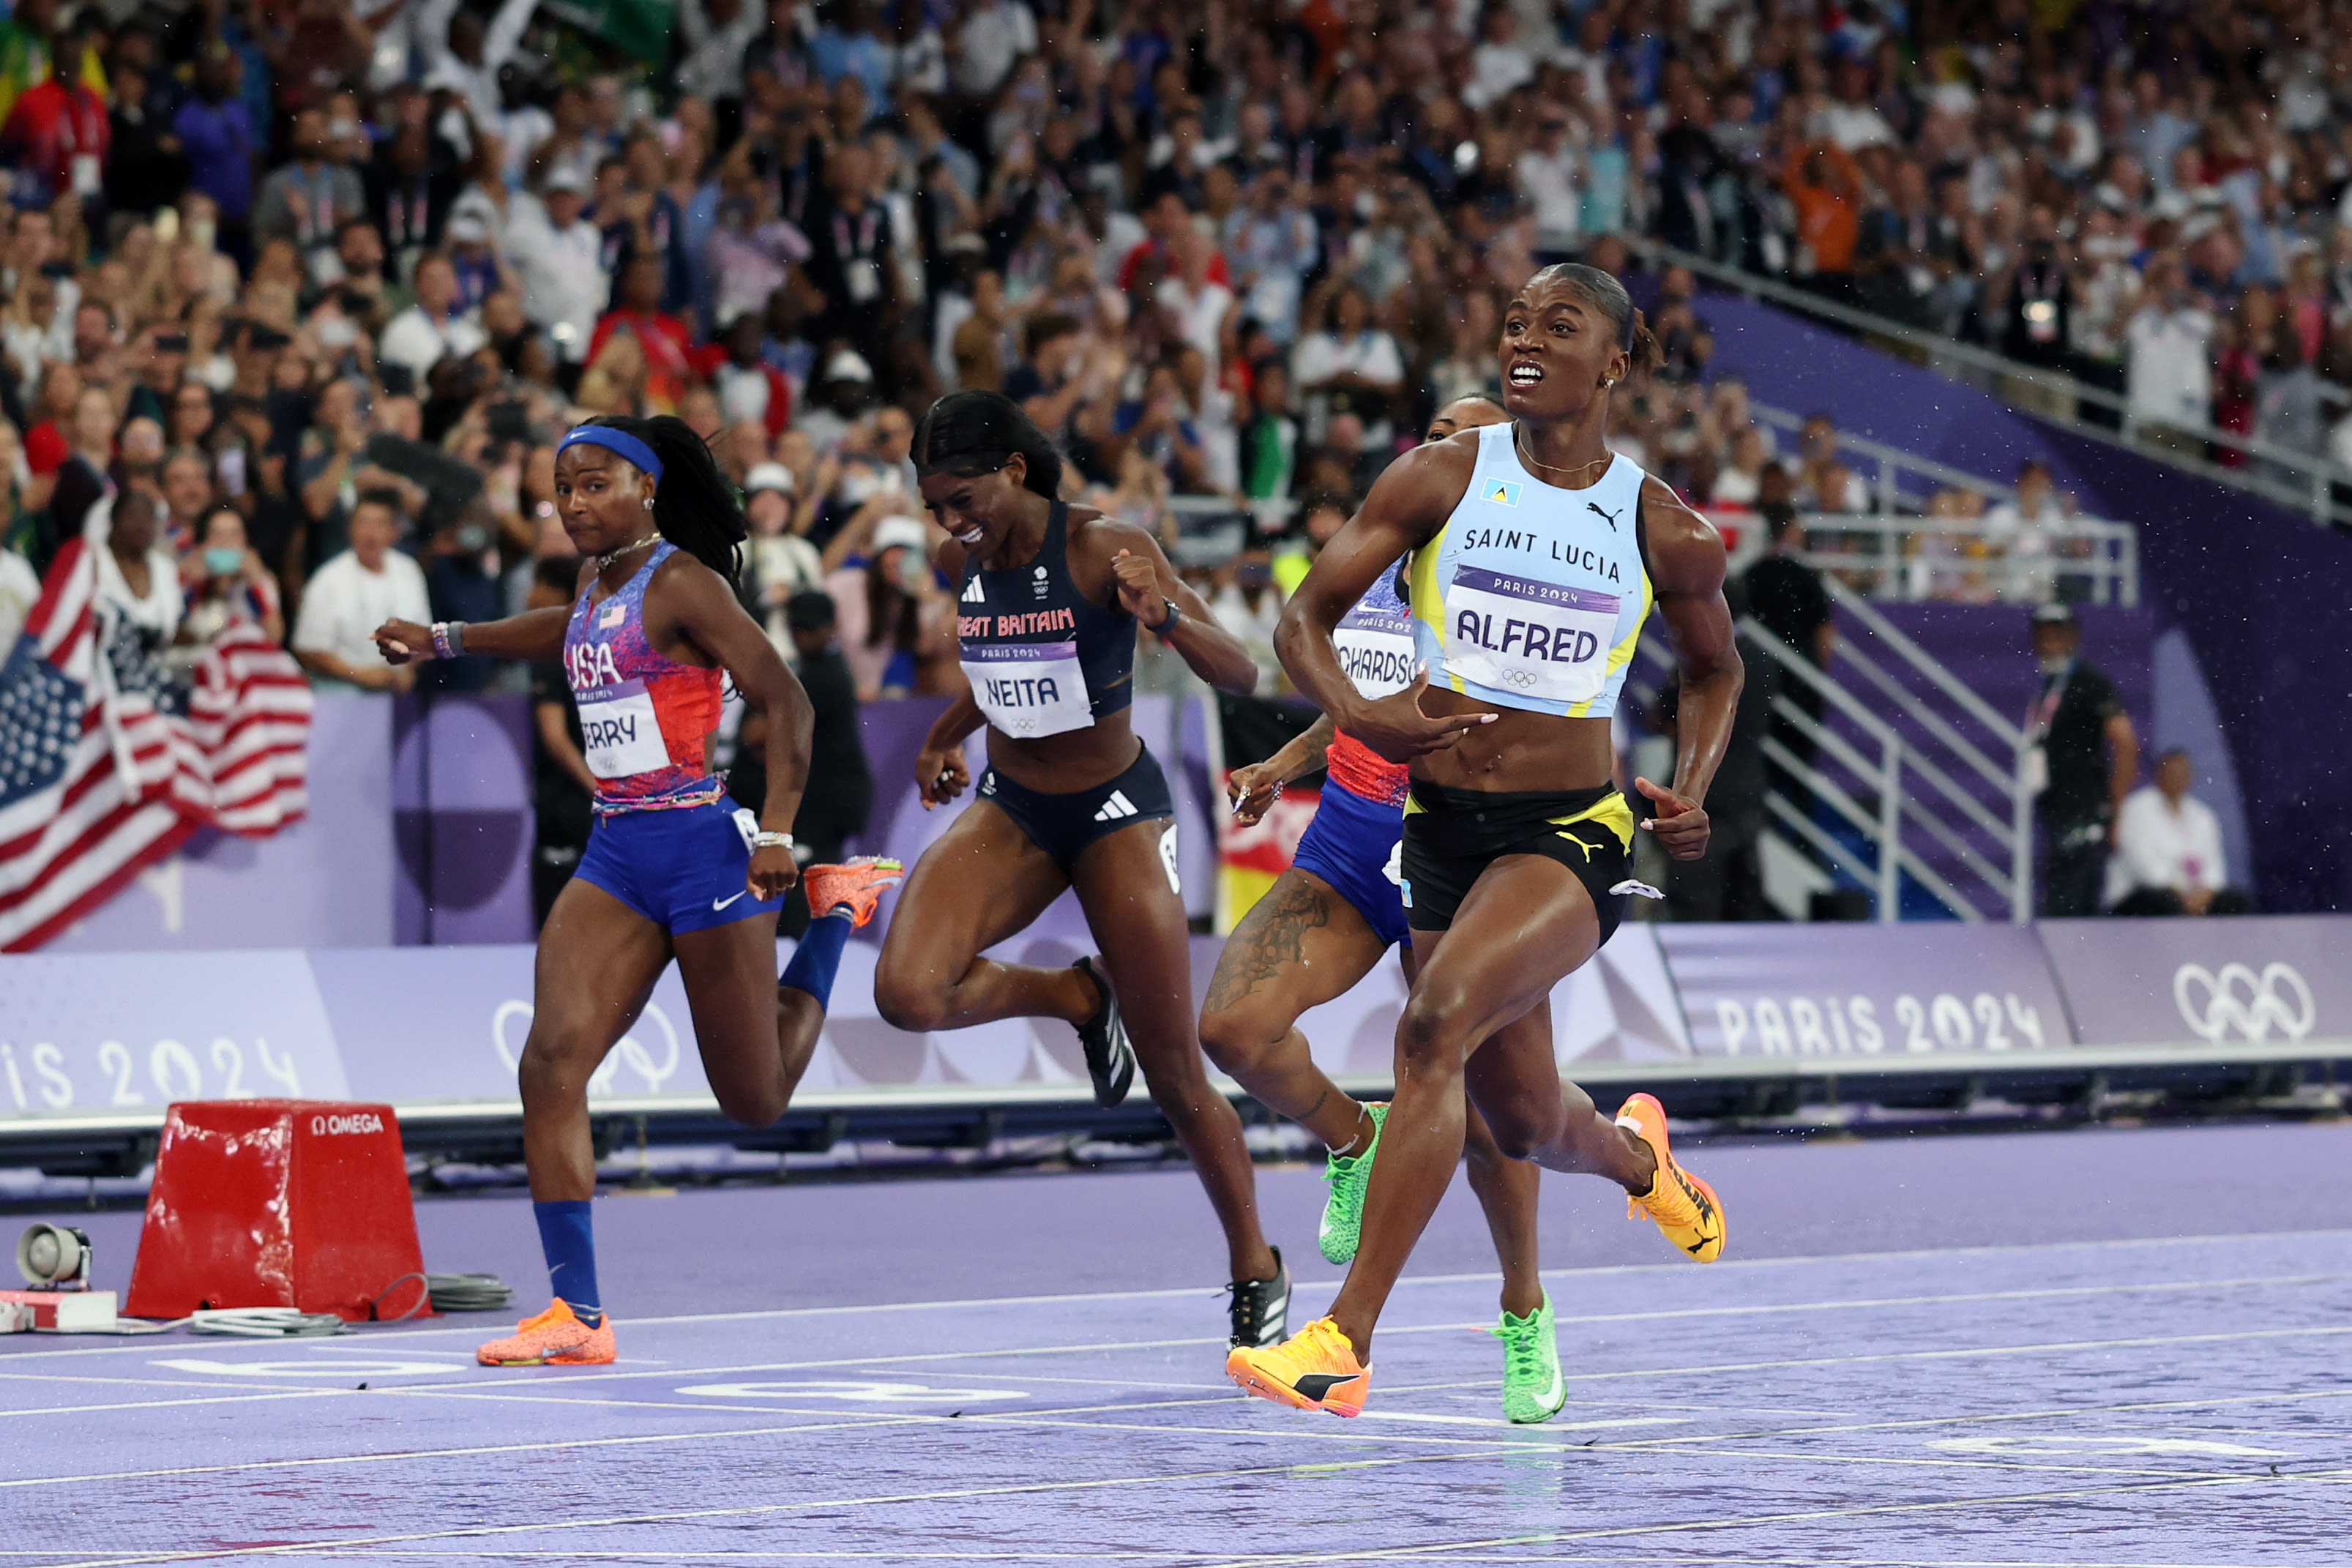 Paris Olympics: Saint Lucia’s Julien Alfred upsets Sha'Carri Richardson in women's 100 meters